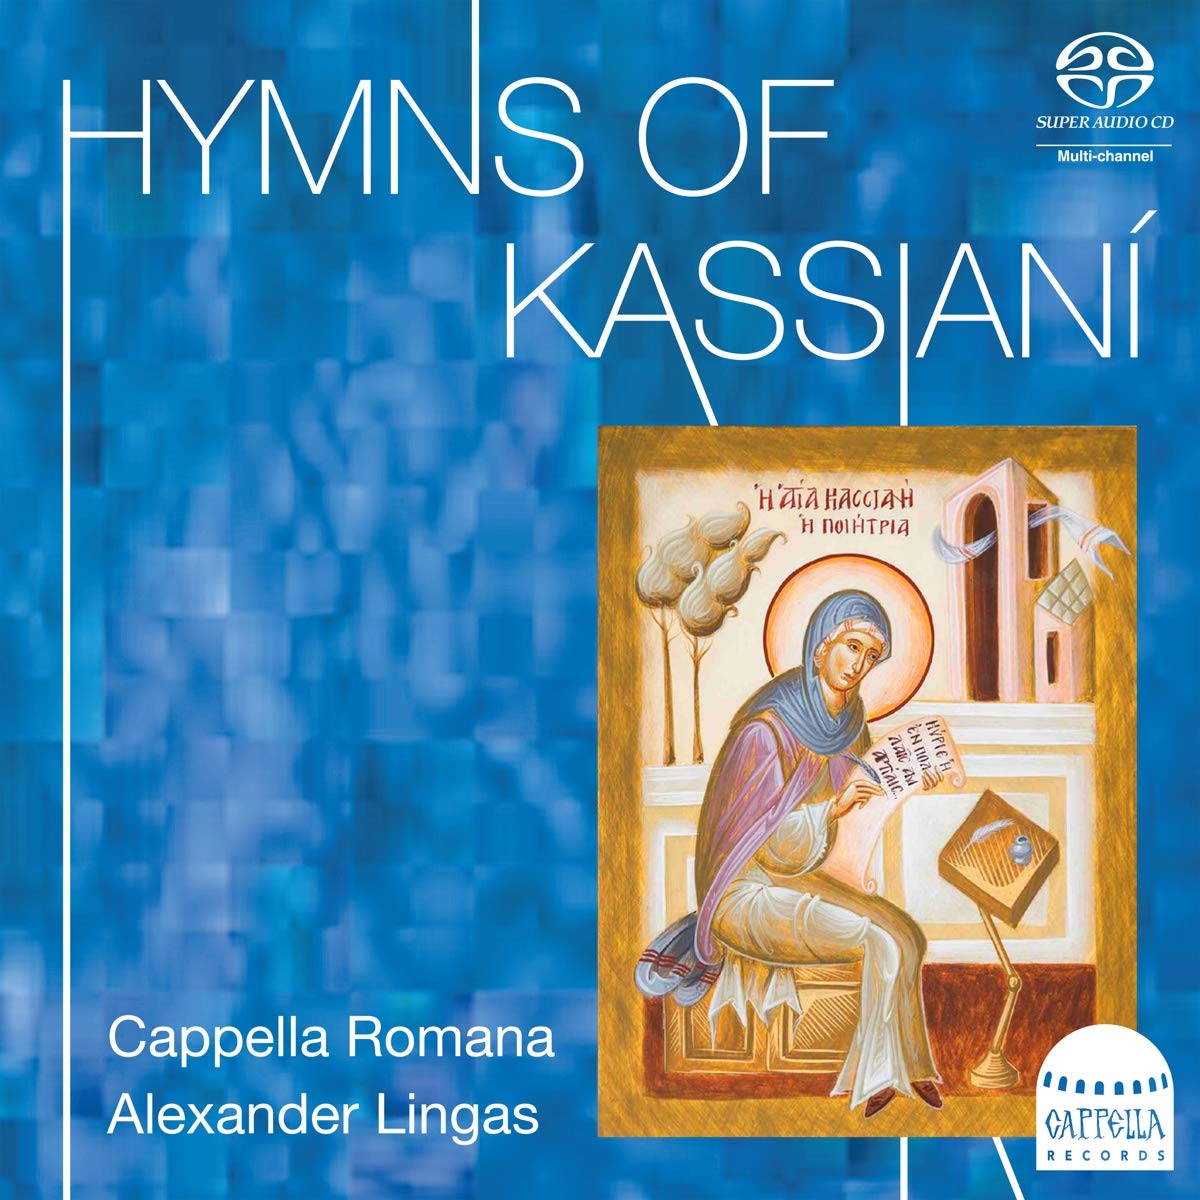 Cappella Romana, Alexander Lingas - Hymns of Kassiani (2021) [FLAC 24bit/192kHz]